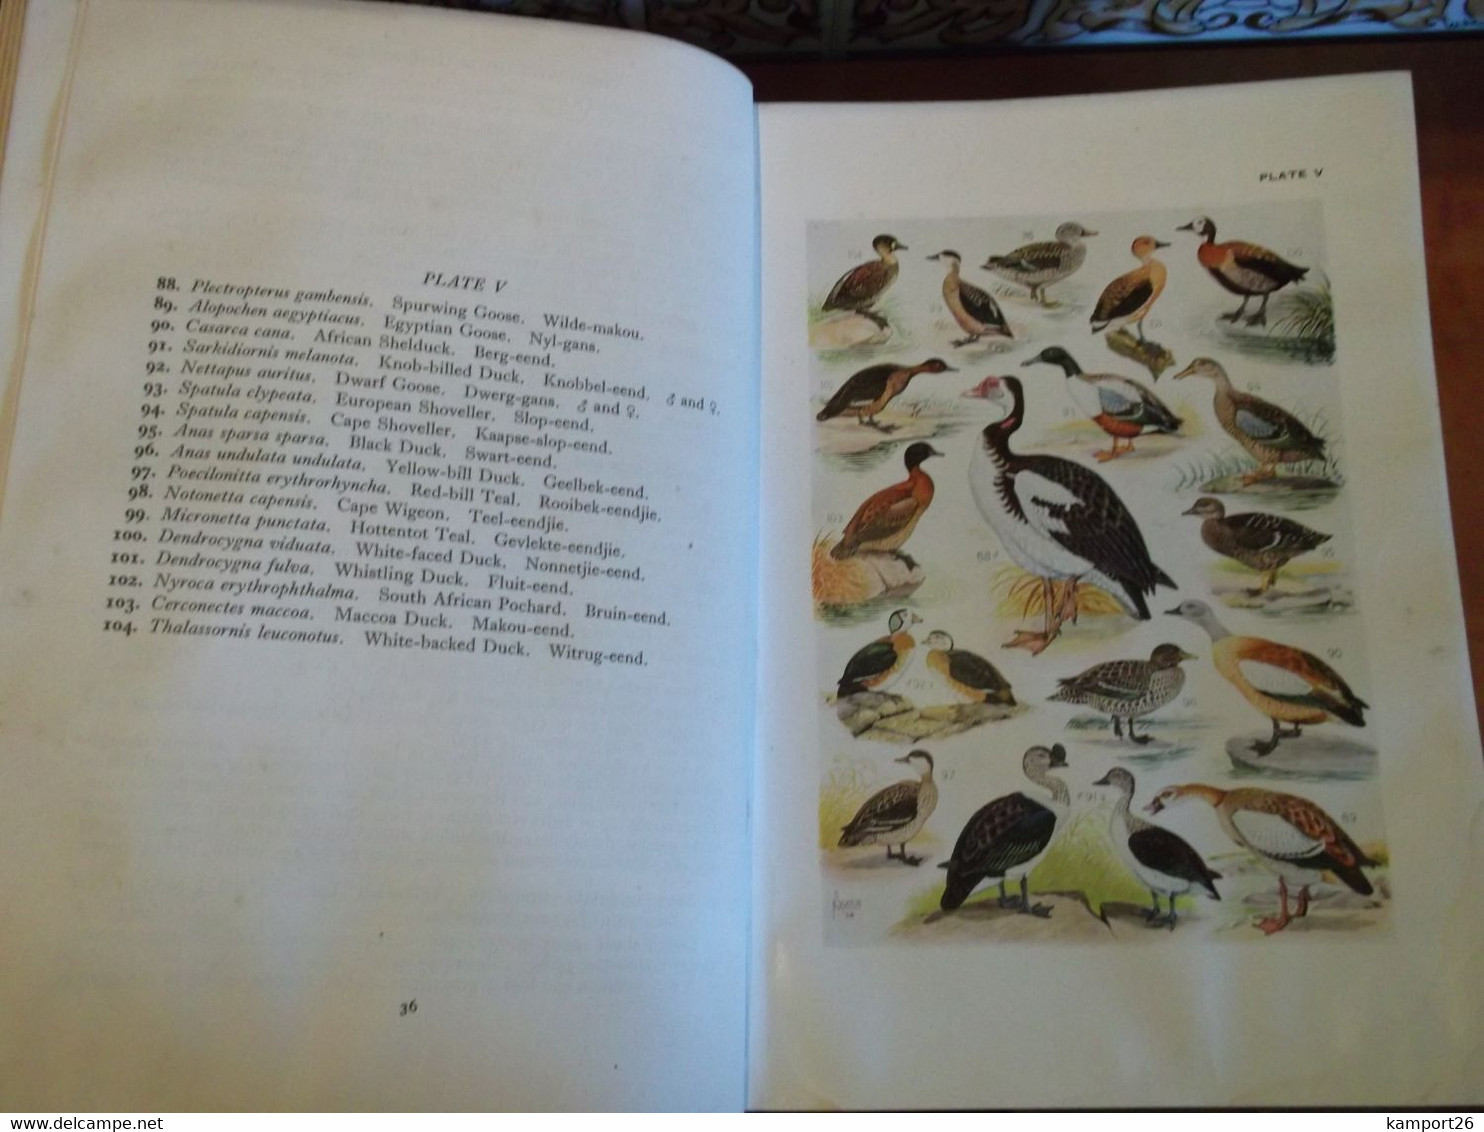 1953 The Birds Of South Africa AUSTIN ROBERTS Ornithology Le Monde De L'ornithologie - Vida Salvaje